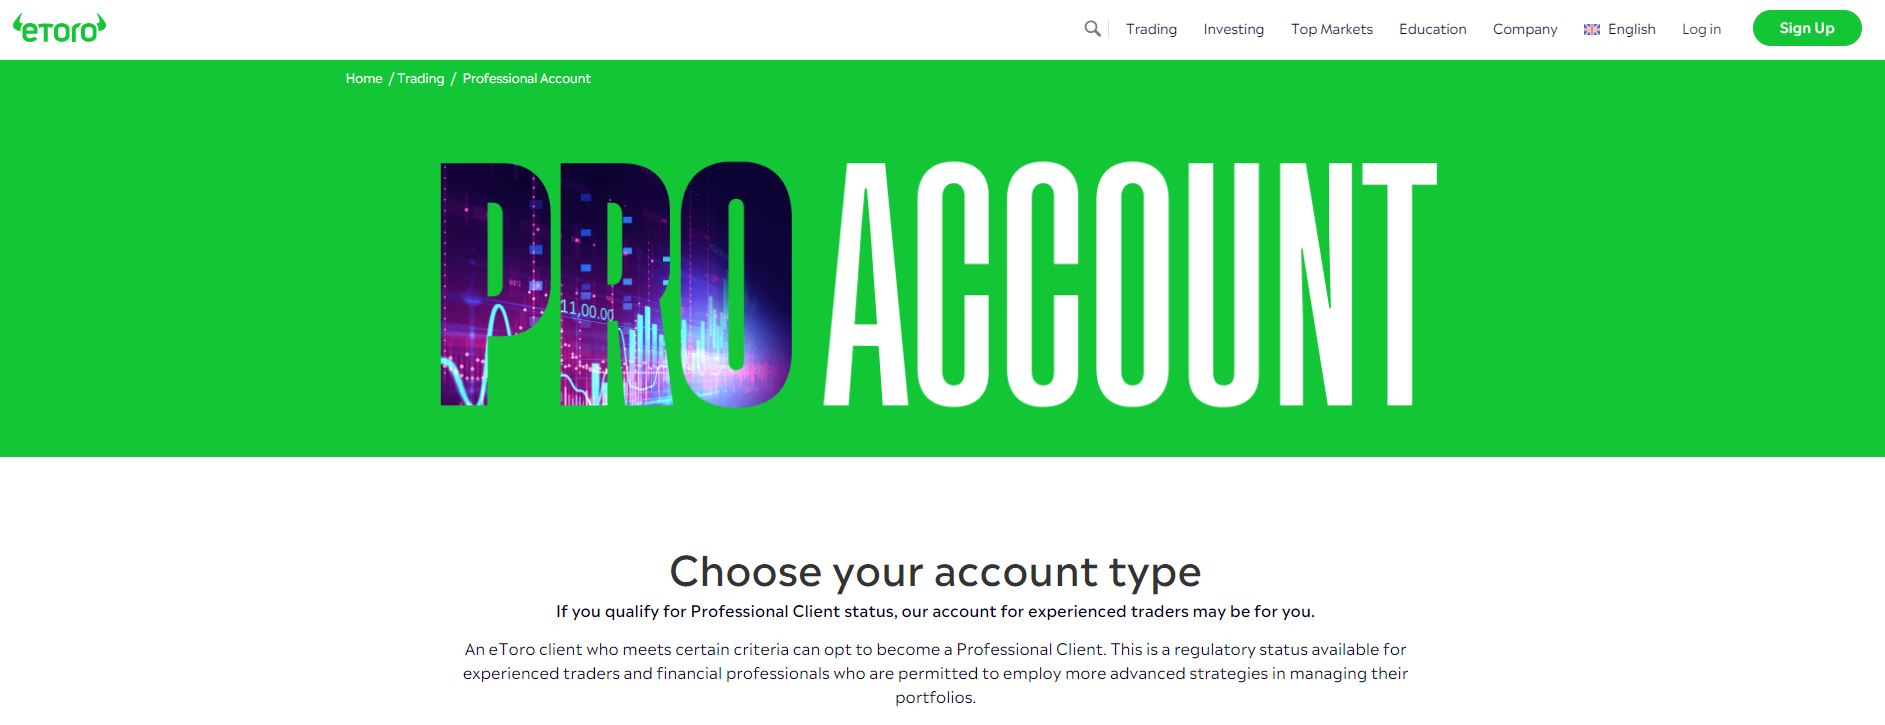 eToro customized trading account types